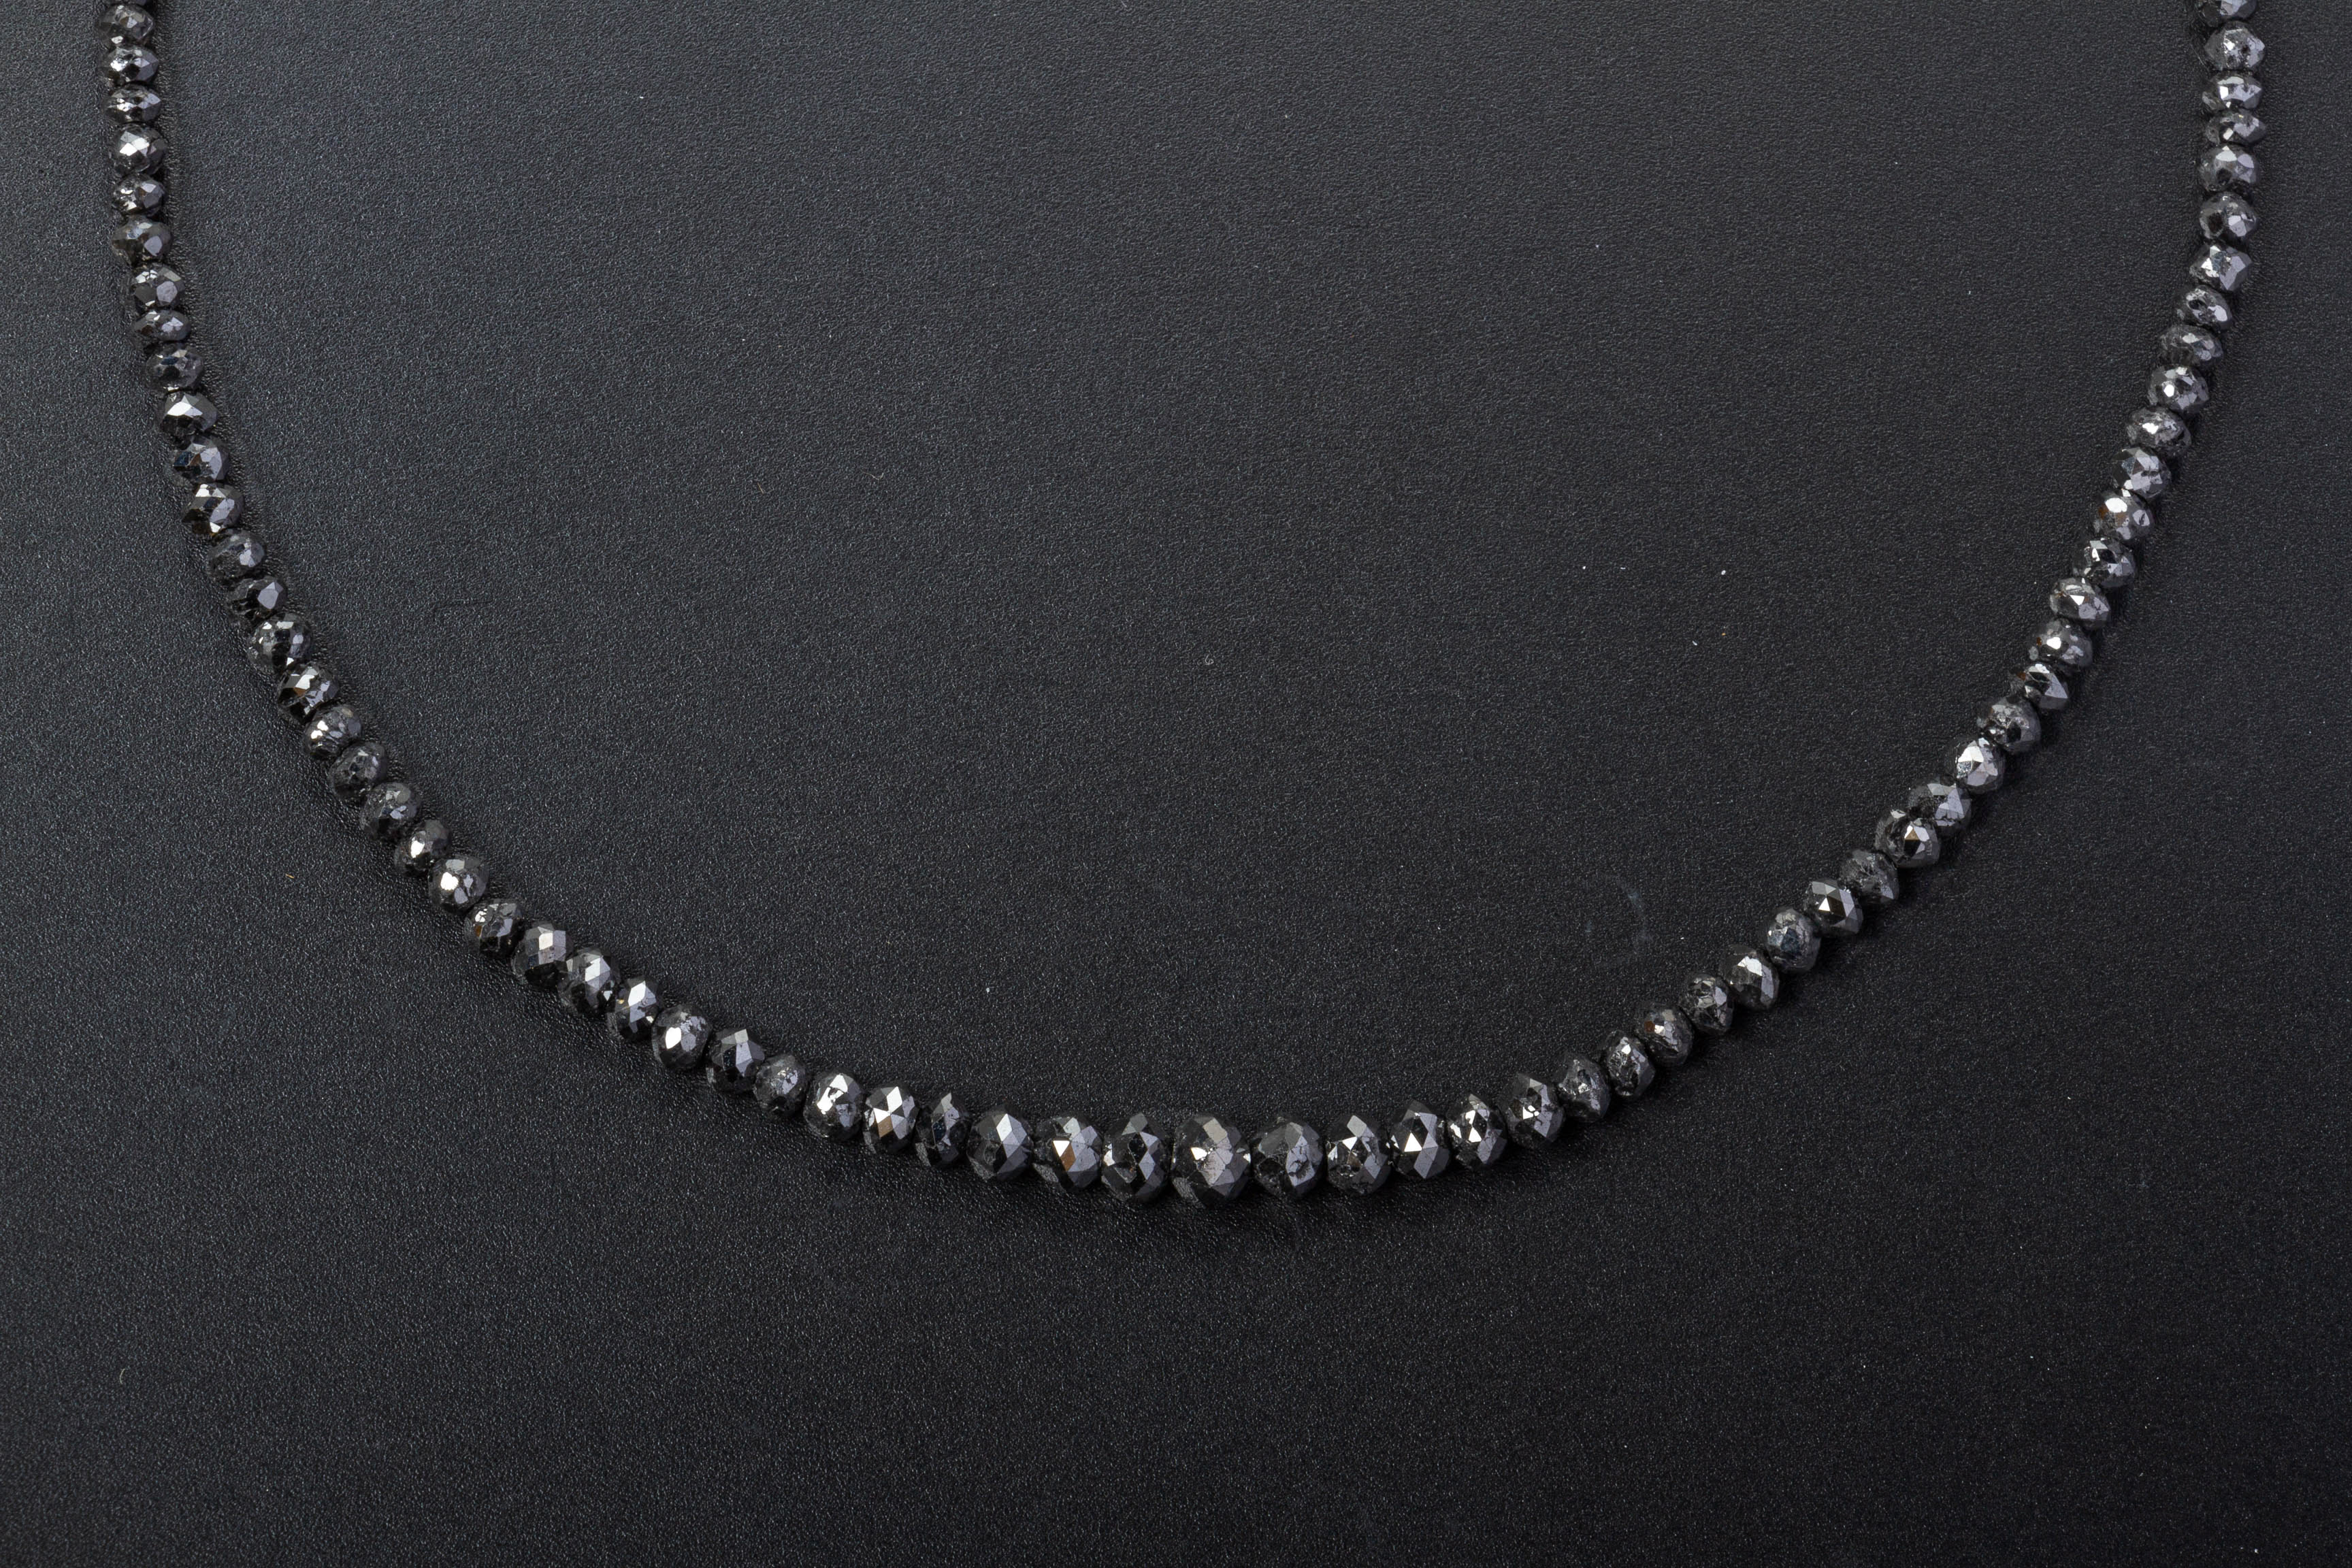 A BLACK DIAMOND NECKLACE - Image 2 of 3